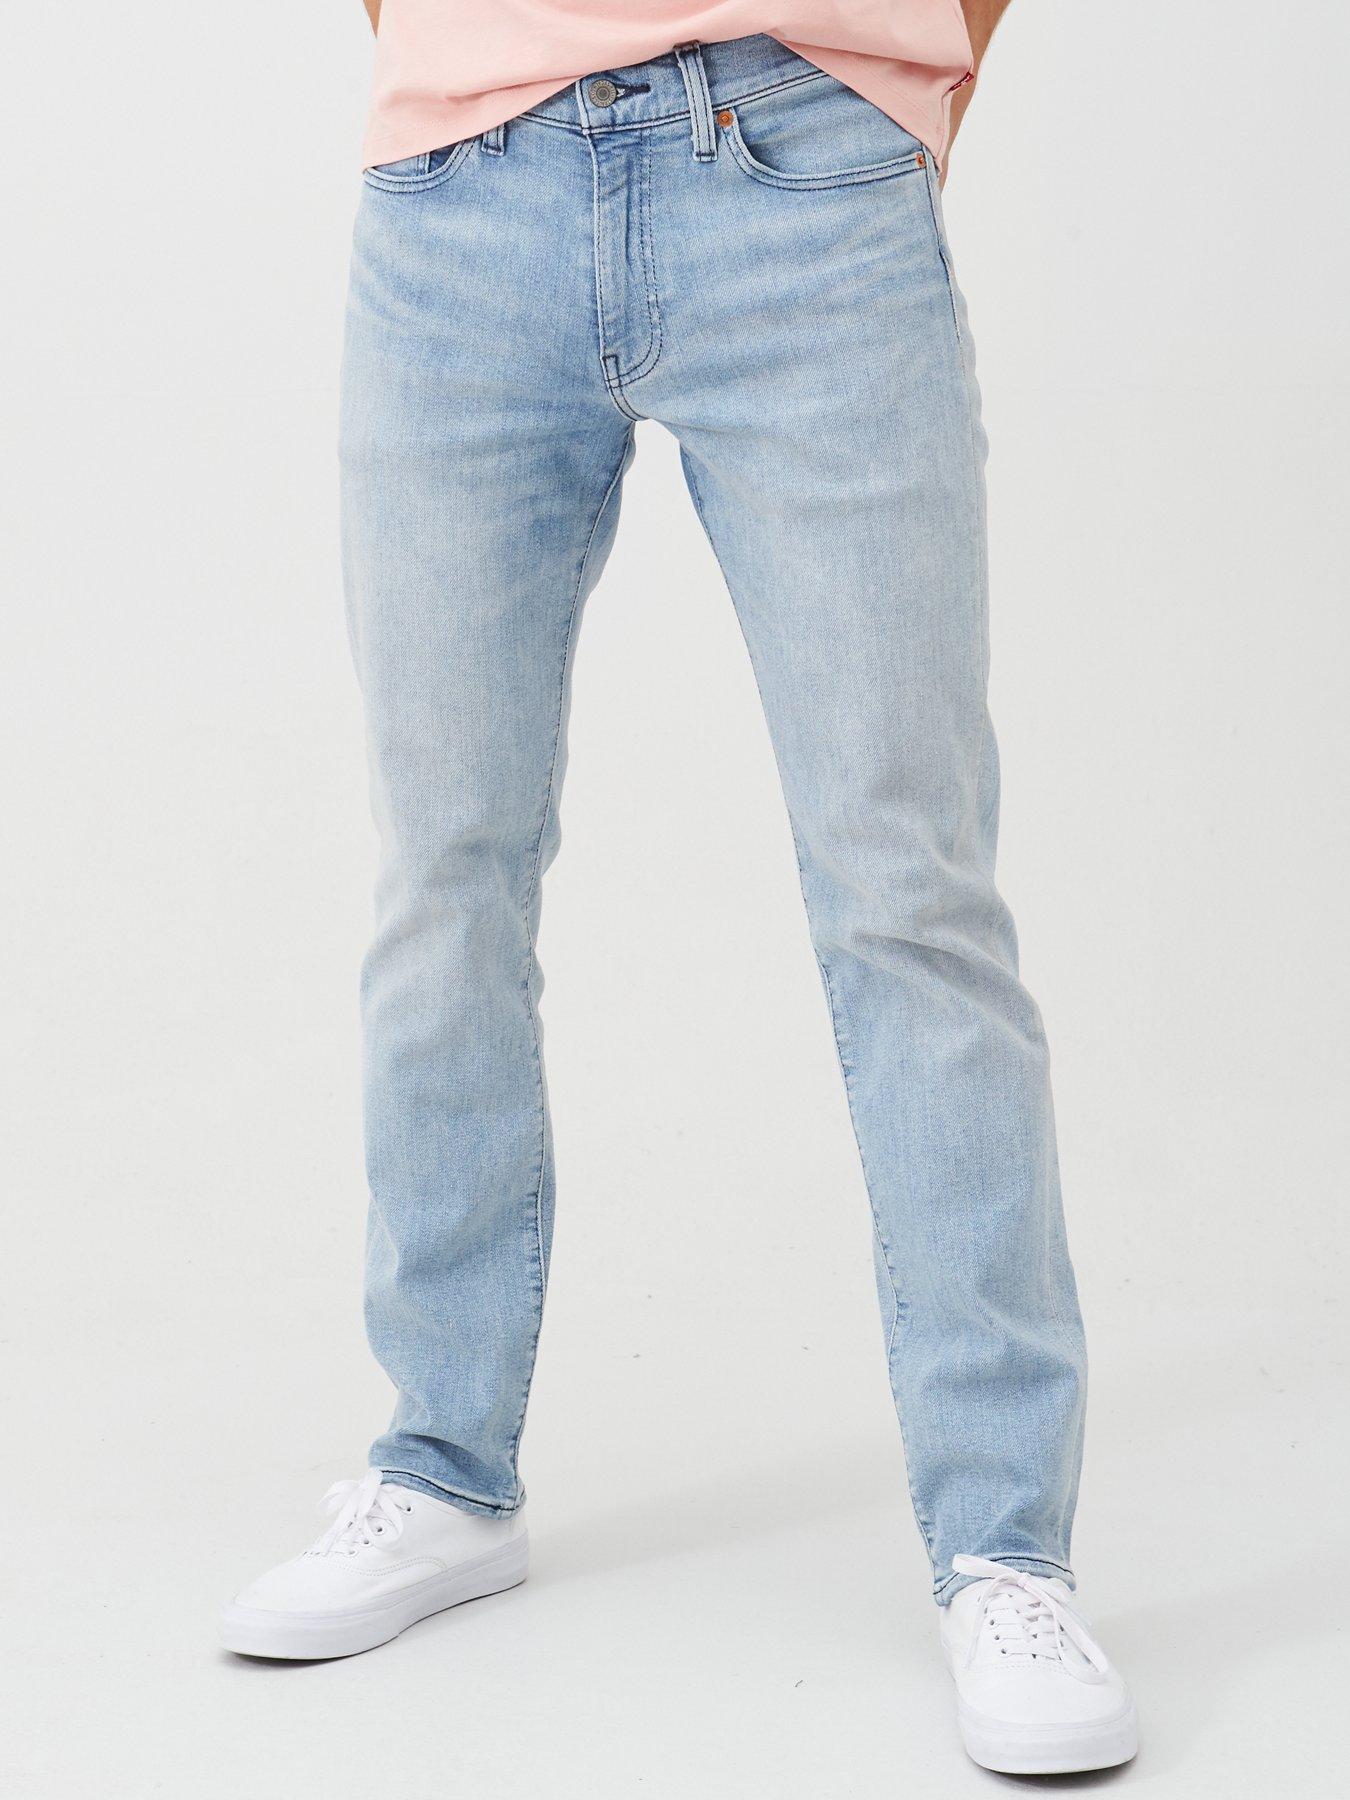 levi's 511 performance stretch jeans